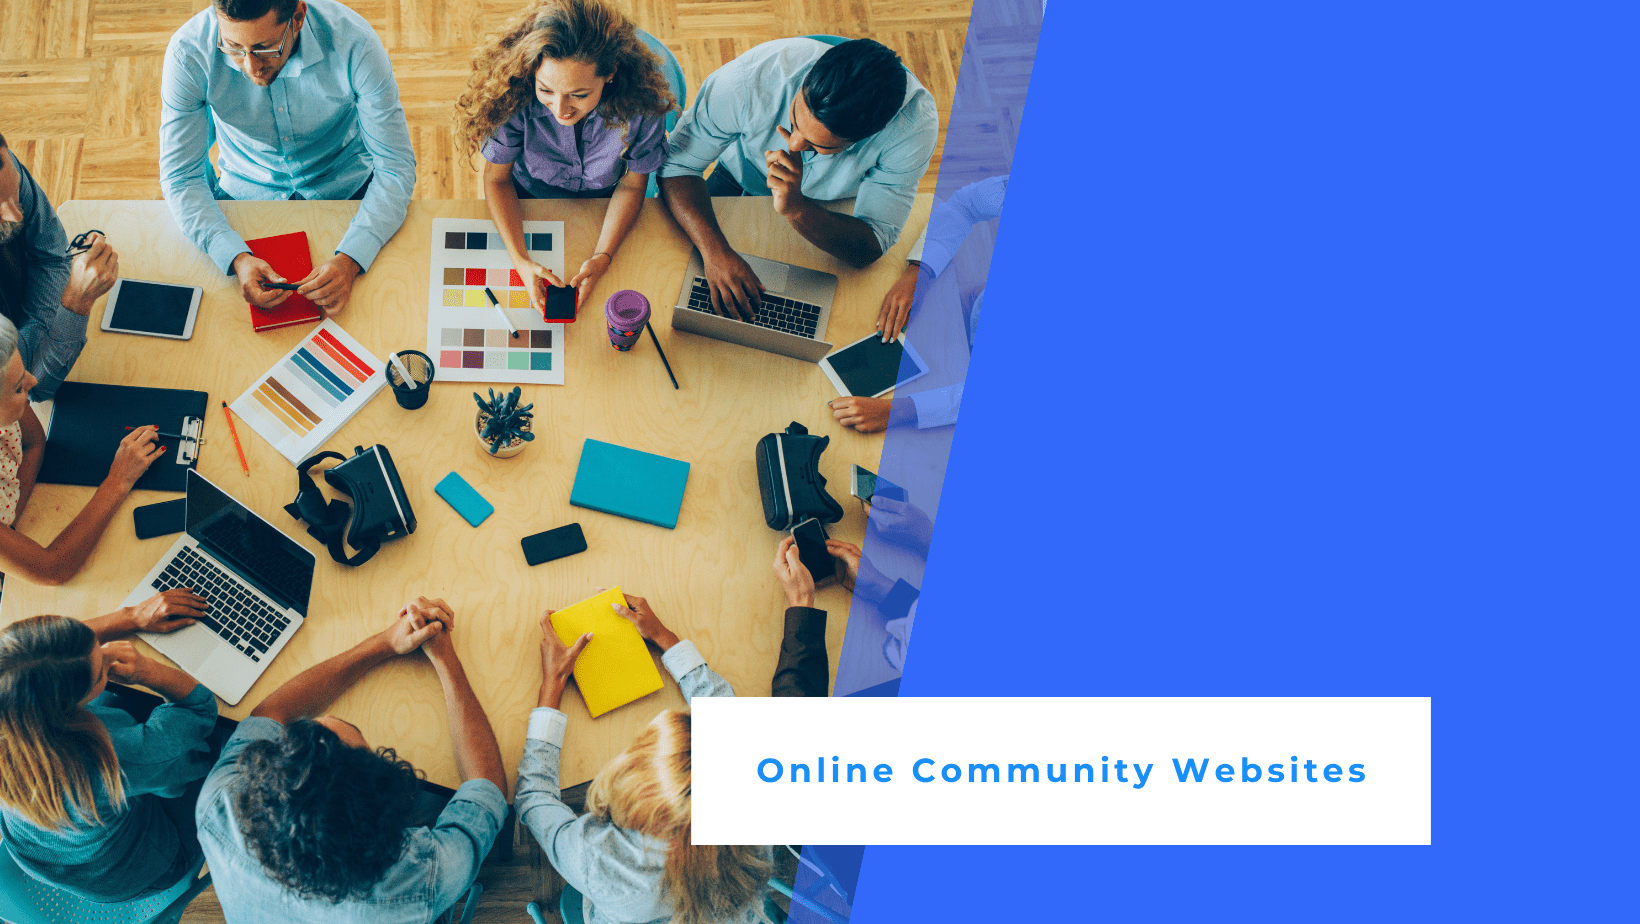 Online community gathering